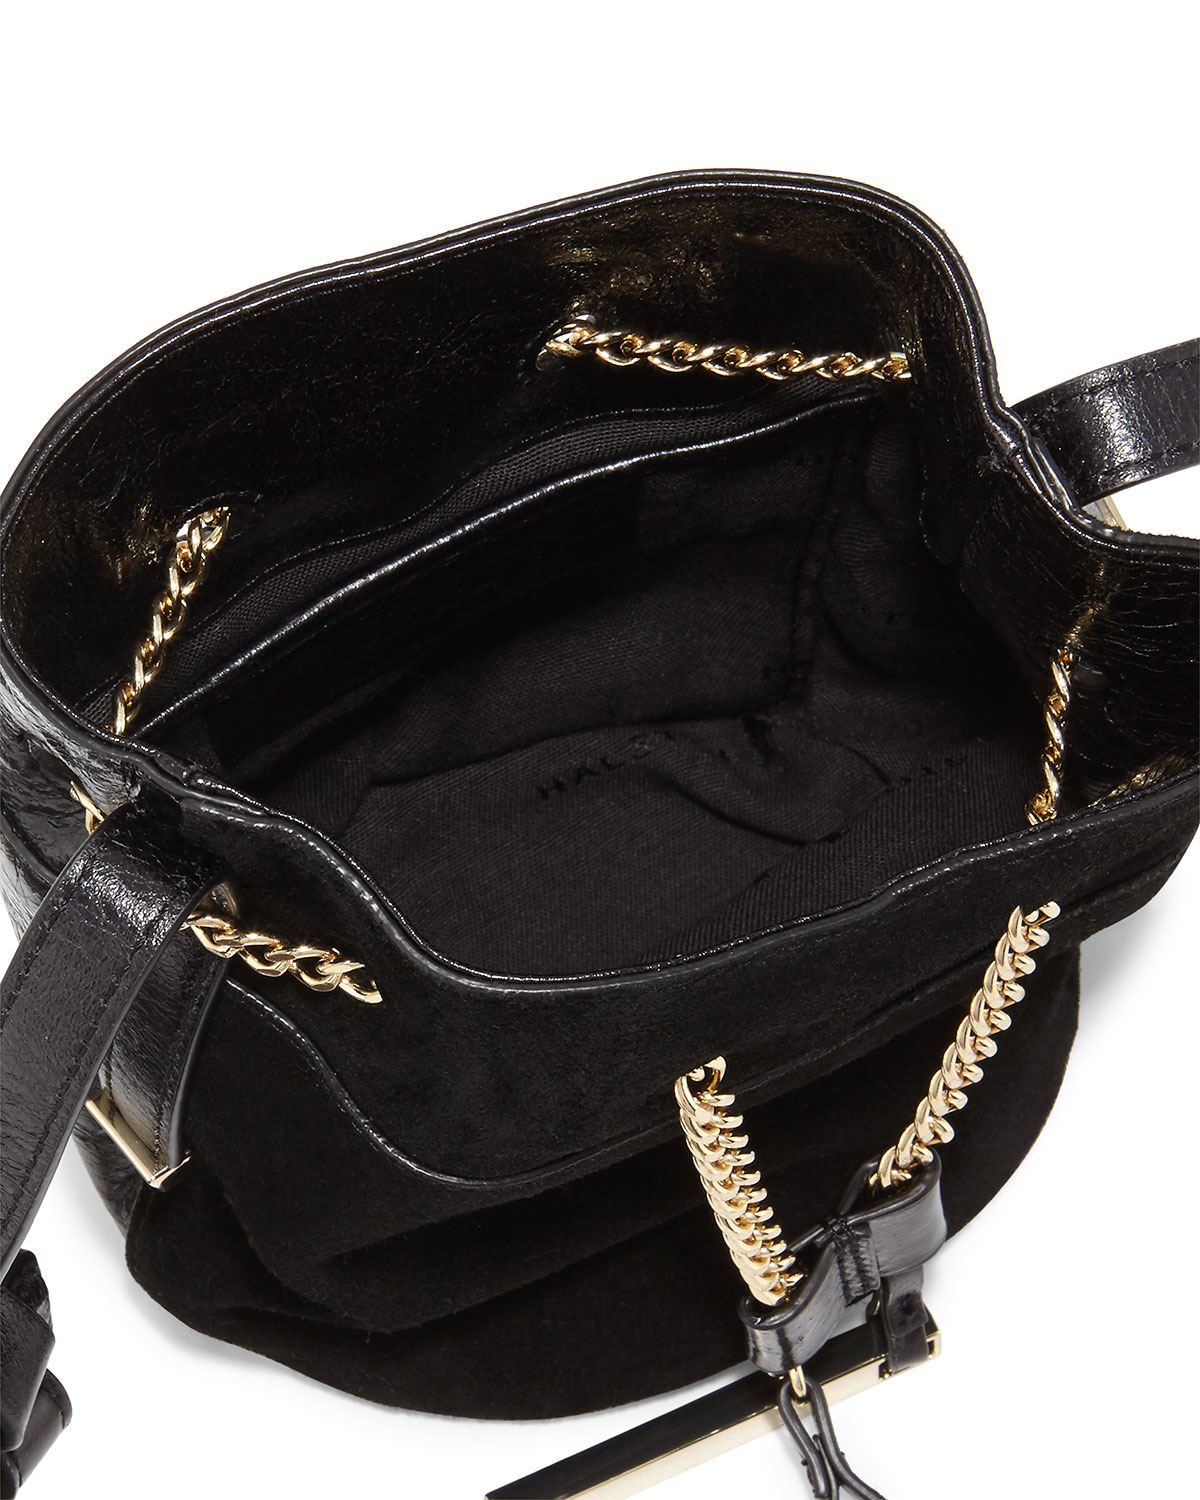 Halston Glazed Leather & Suede Bucket Bag in Black - Lyst